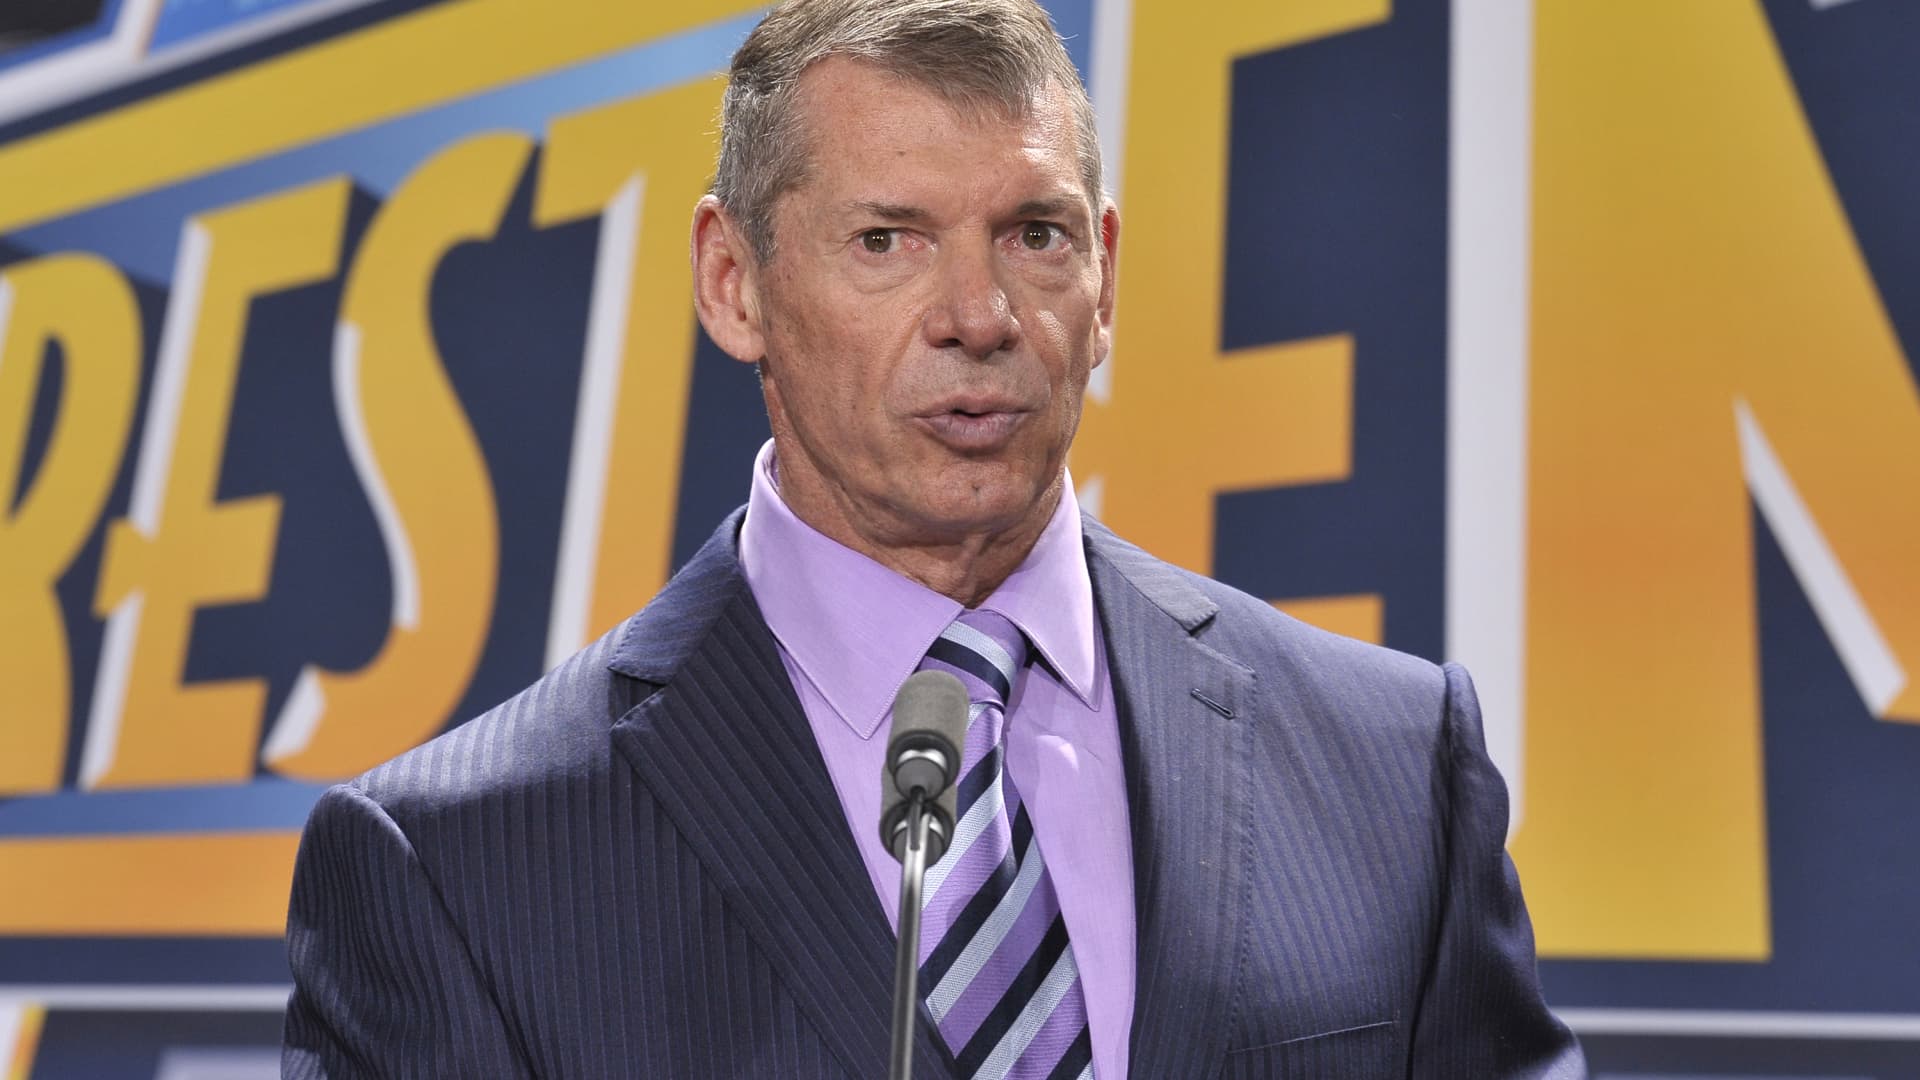 WWE board investigates secret $3 million hush payment by Vince McMahon